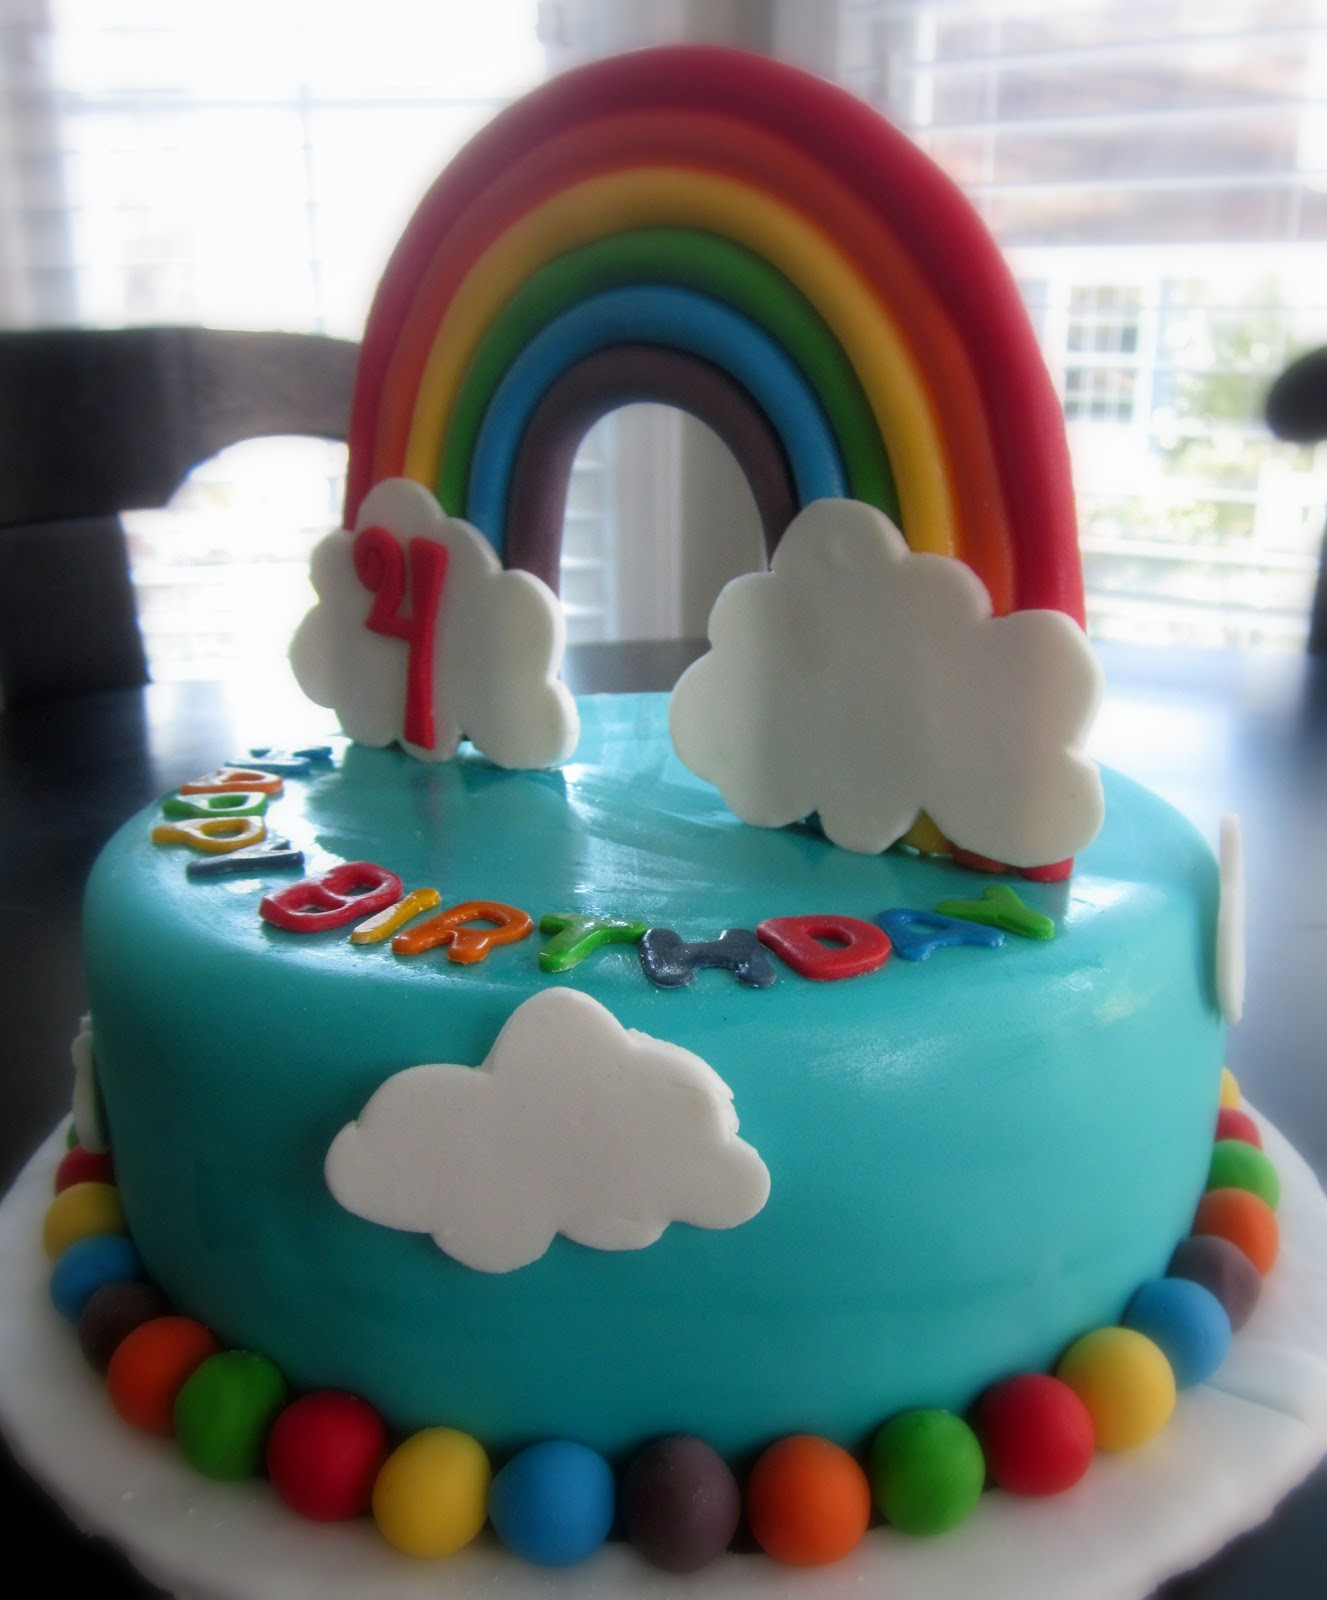 Rainbow Birthday Cakes
 Darlin Designs Rainbow Birthday Cake